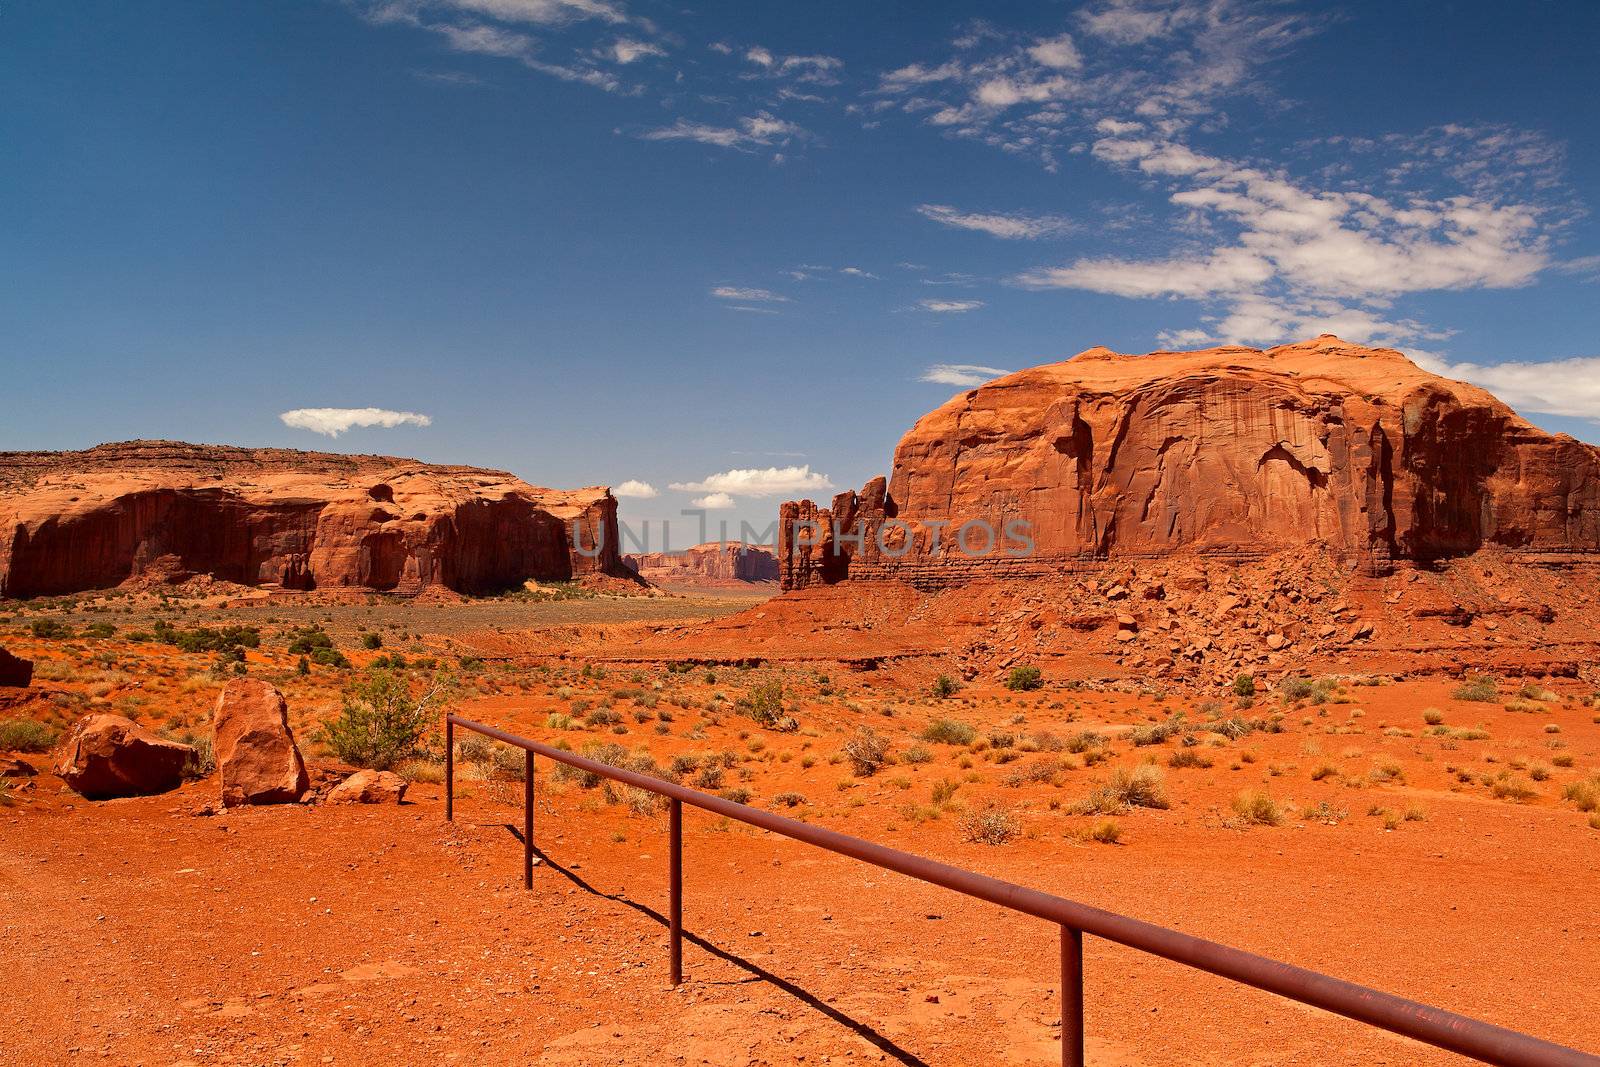 Peaks of rock formations in the Navajo Park of Monument Valley Utah